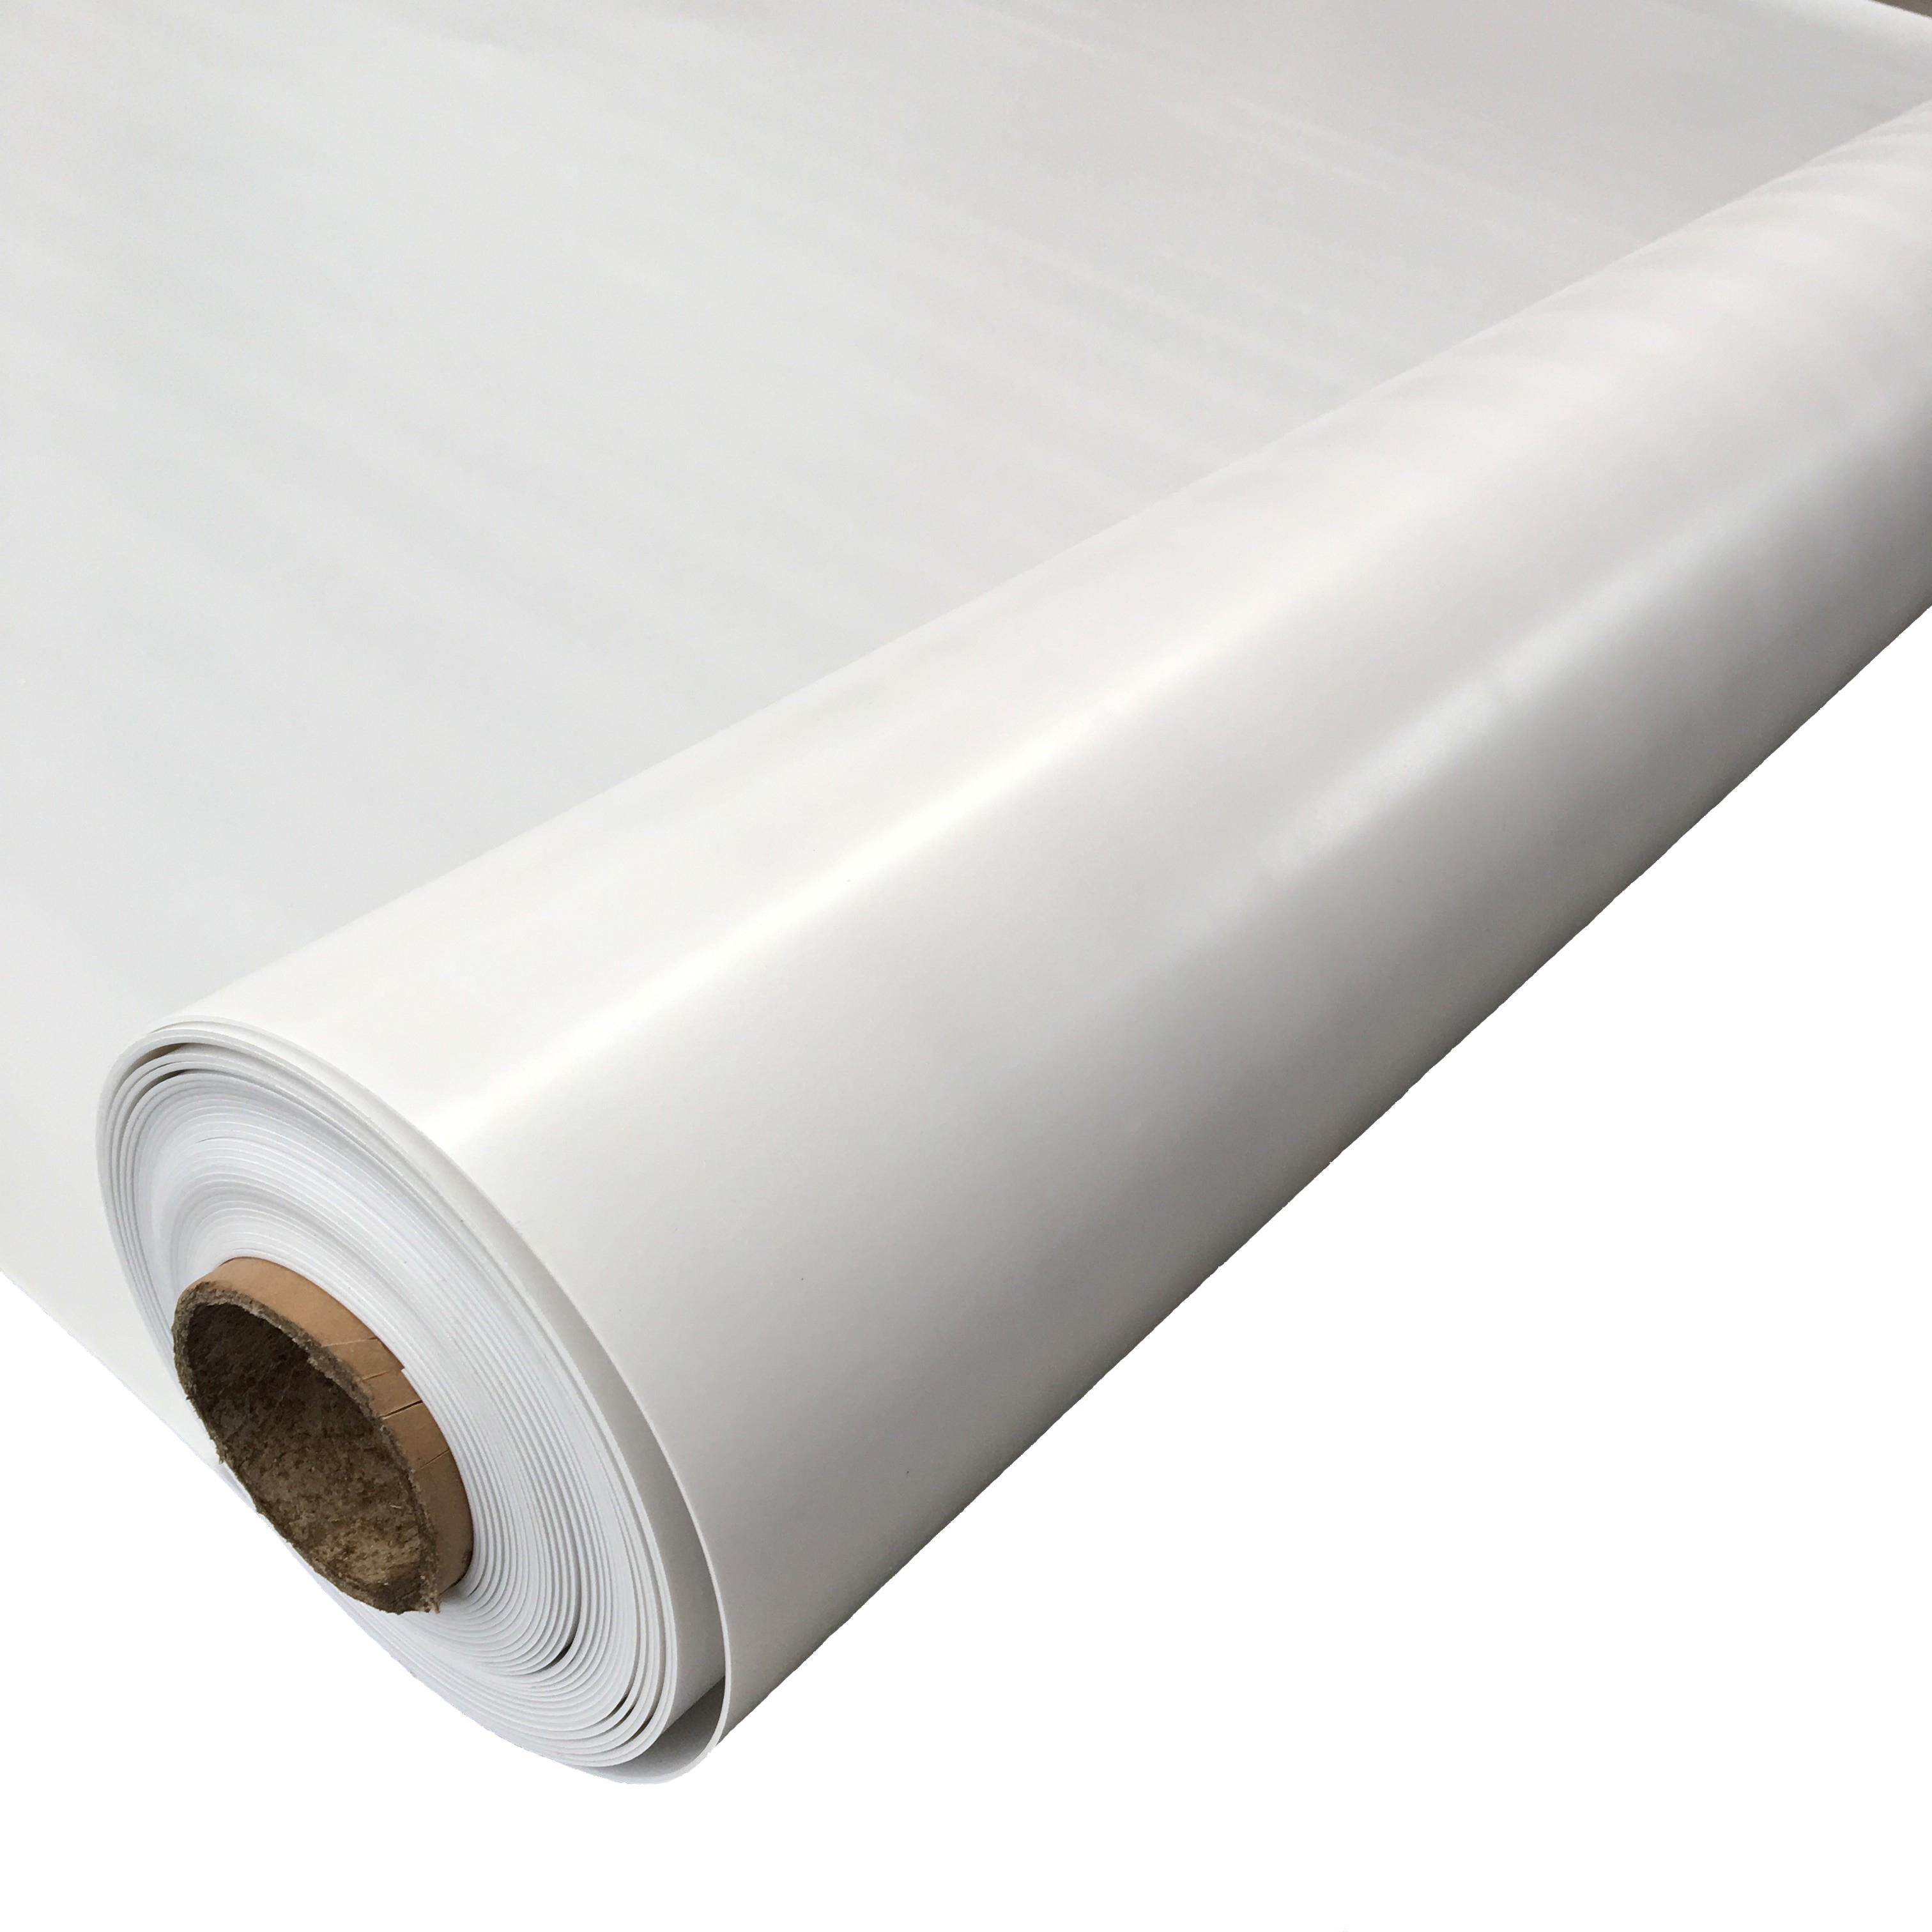 Single Ply Roofing Tpo Waterproof Membrane Roll